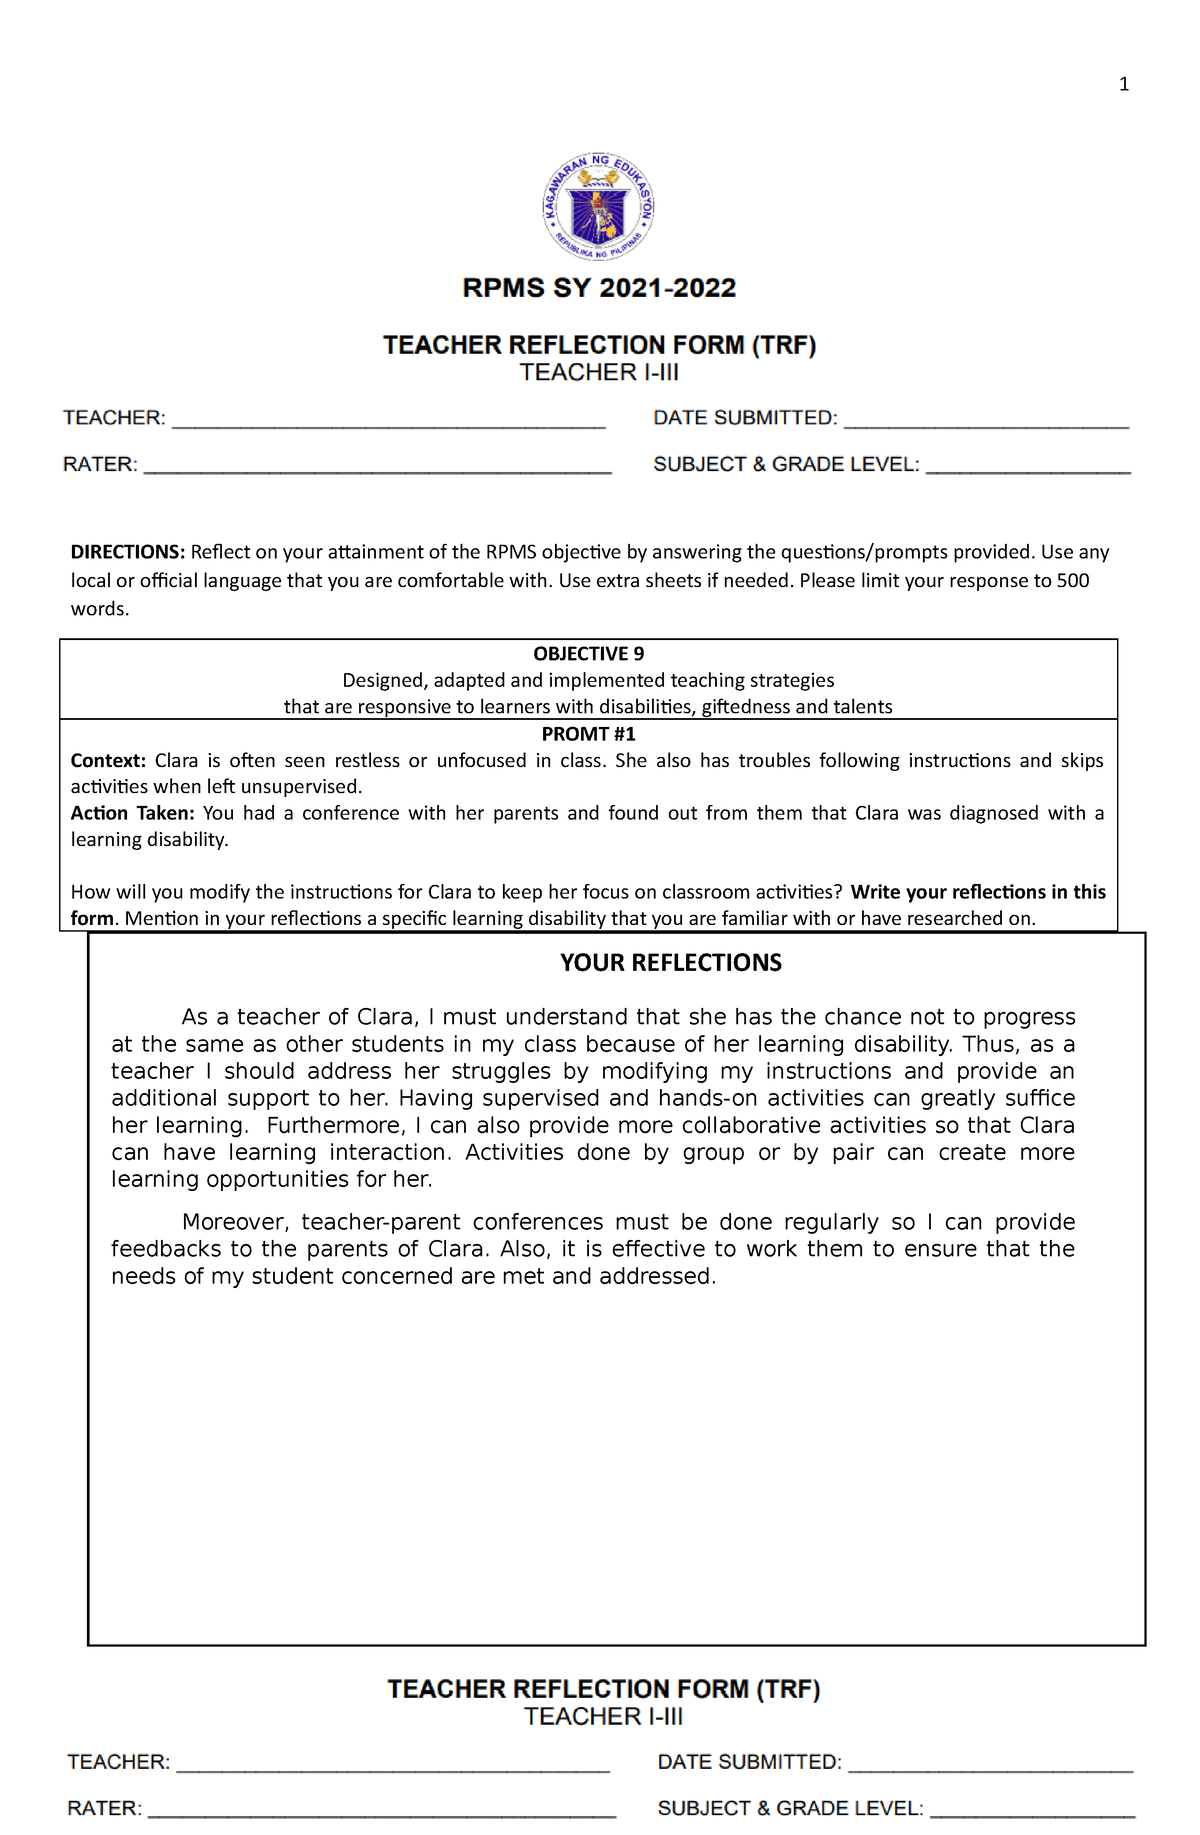 RPMS SY 2021 2022 Teacher Reflection FORM TRF - DIRECTIONS: Reæ˜€æ°€ect on ...